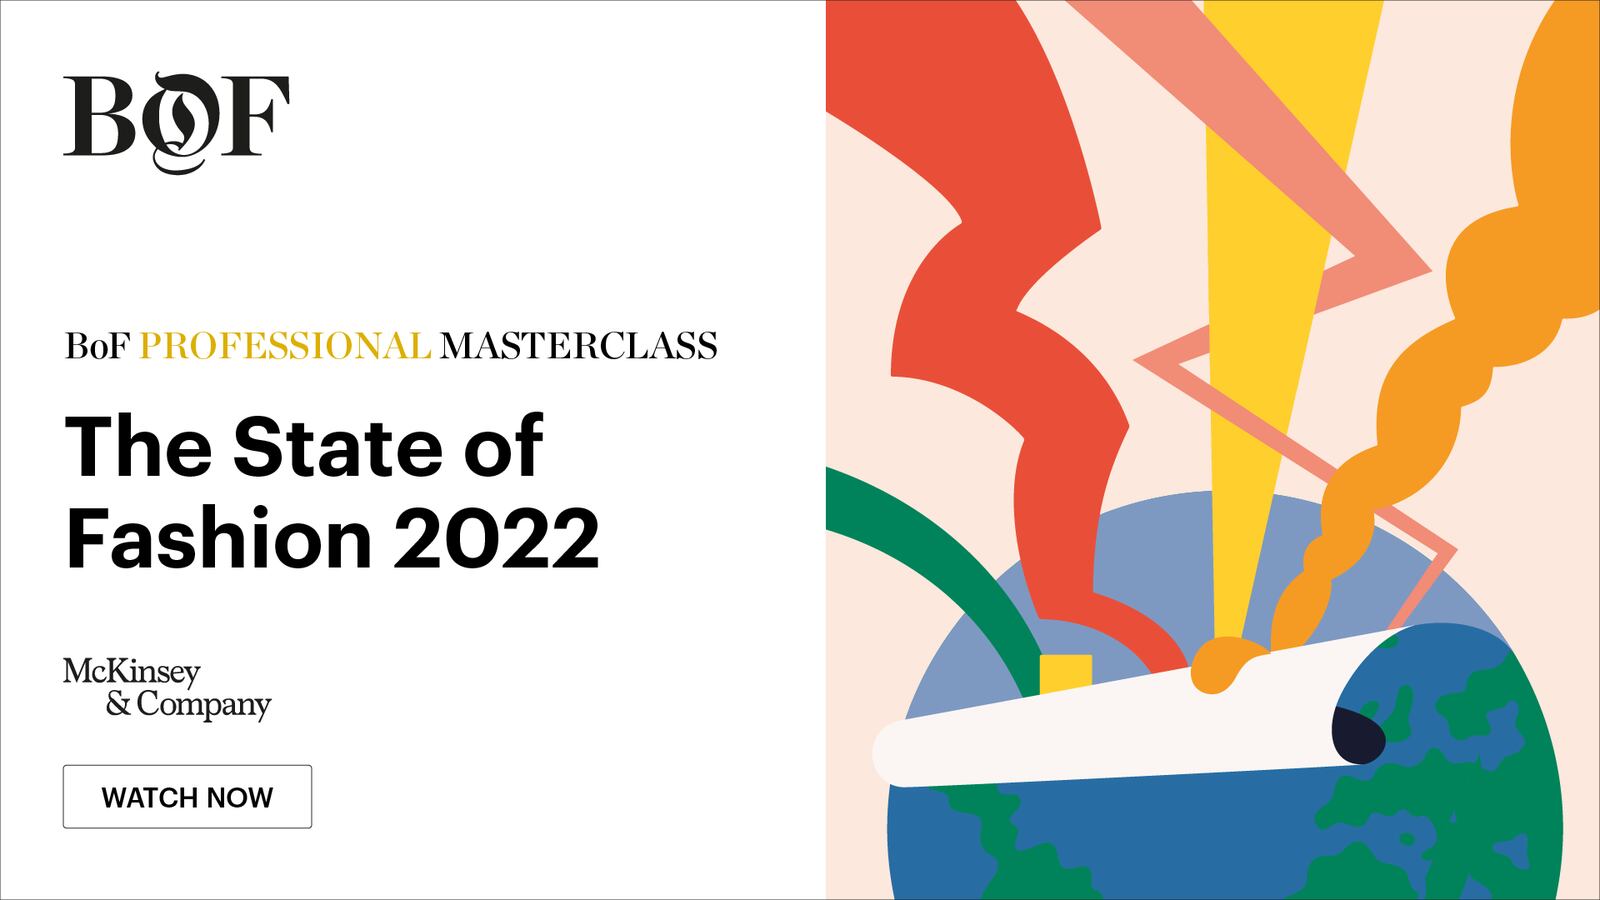 BoF Professional Masterclass The State of Fashion 2022